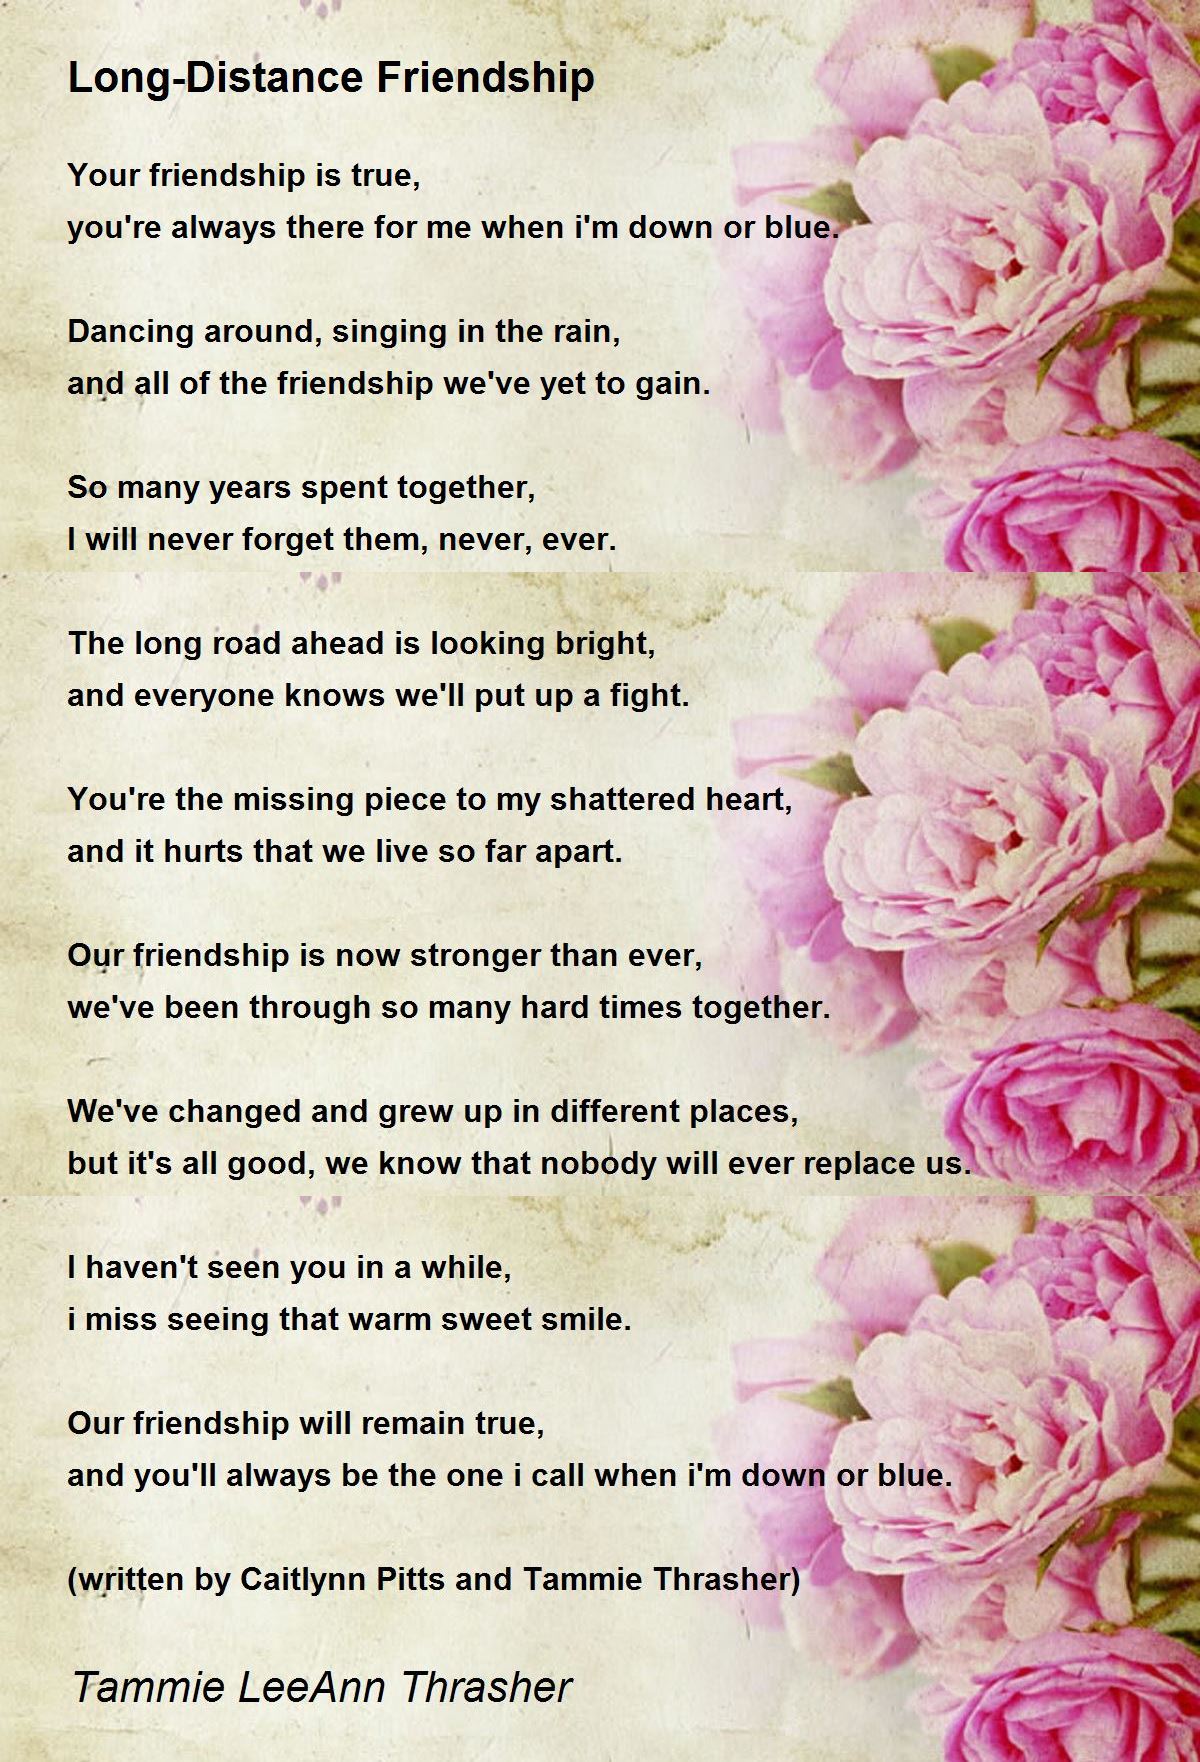 Long-Distance Friendship Poem by Tammie LeeAnn Thrasher - Poem Hunter